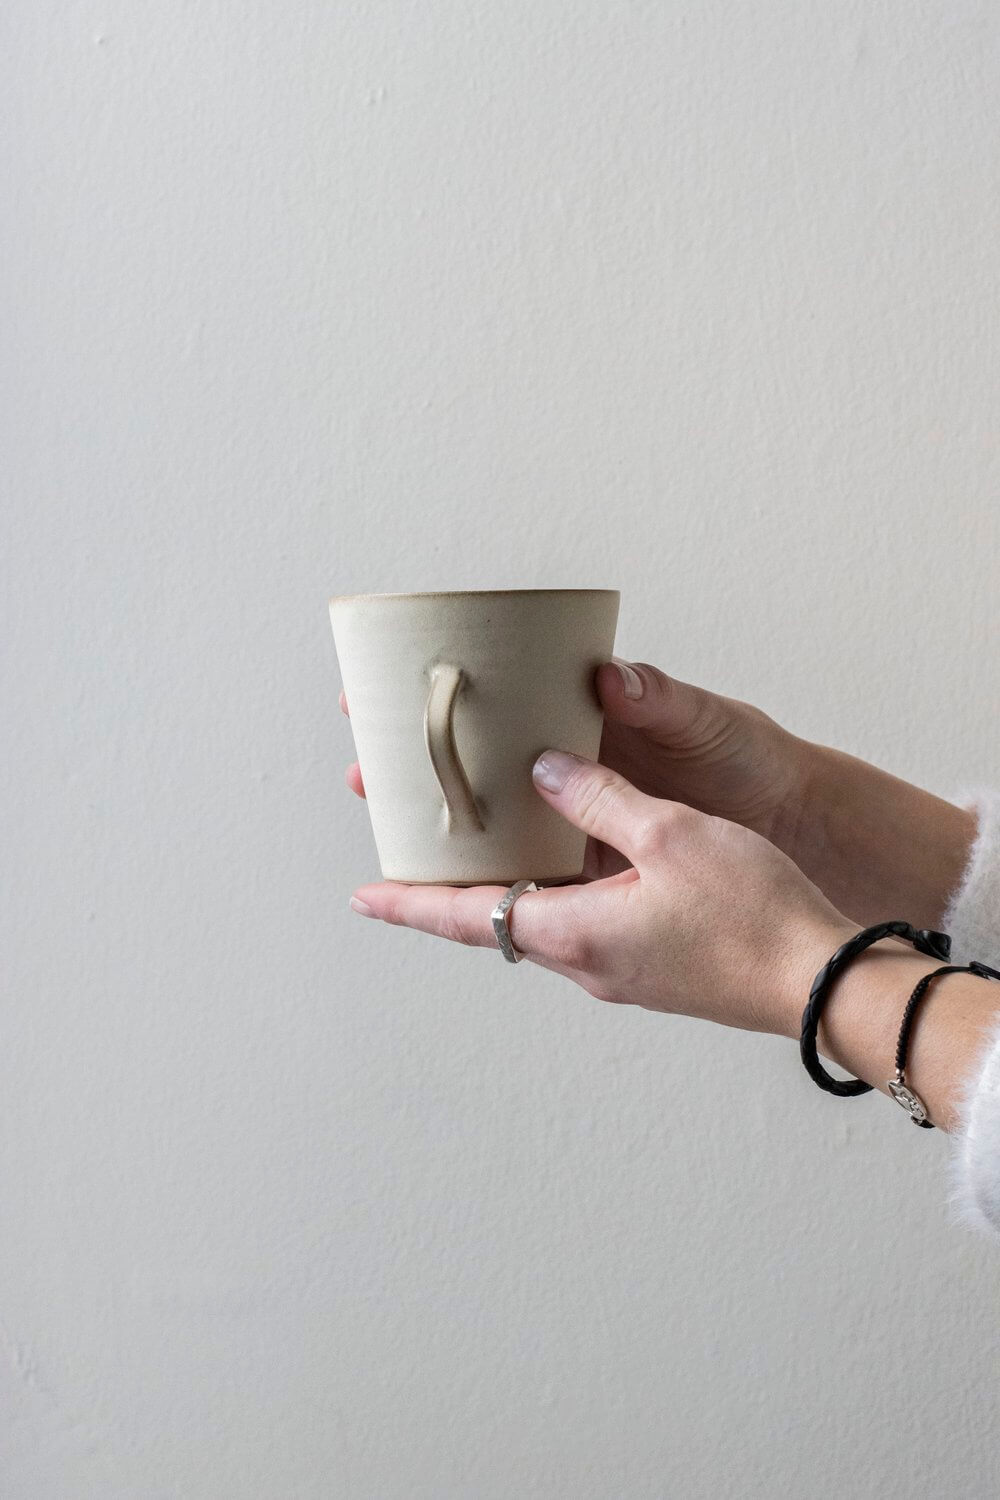 Large Flared Mug with Handle | Off-White | by Borja Moronta - Lifestory - Borja Moronta